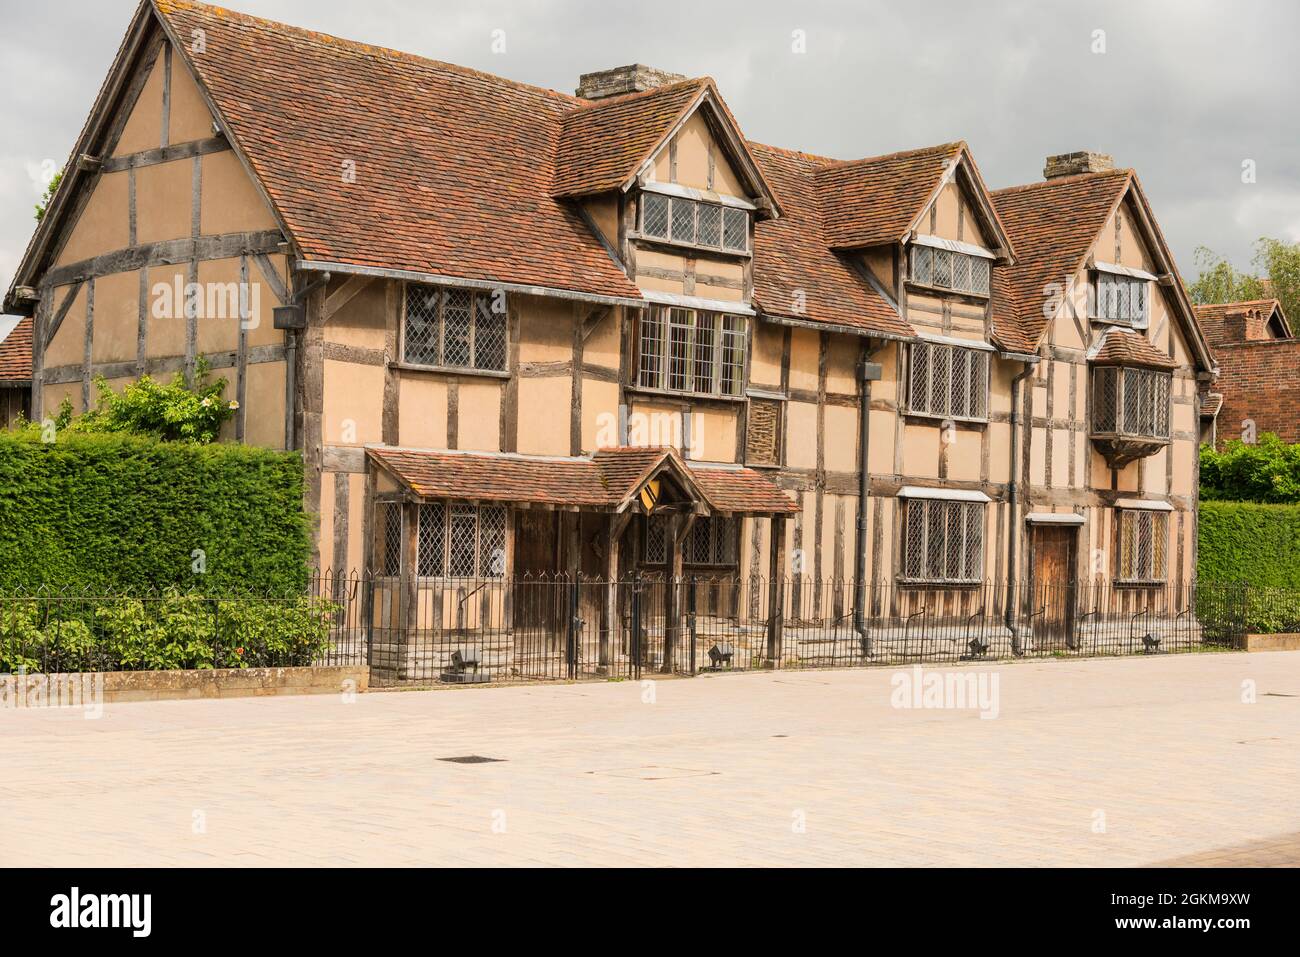 William Shakespear`s birthplace in Stratford upon Avon Warwickshire England UK. Stock Photo